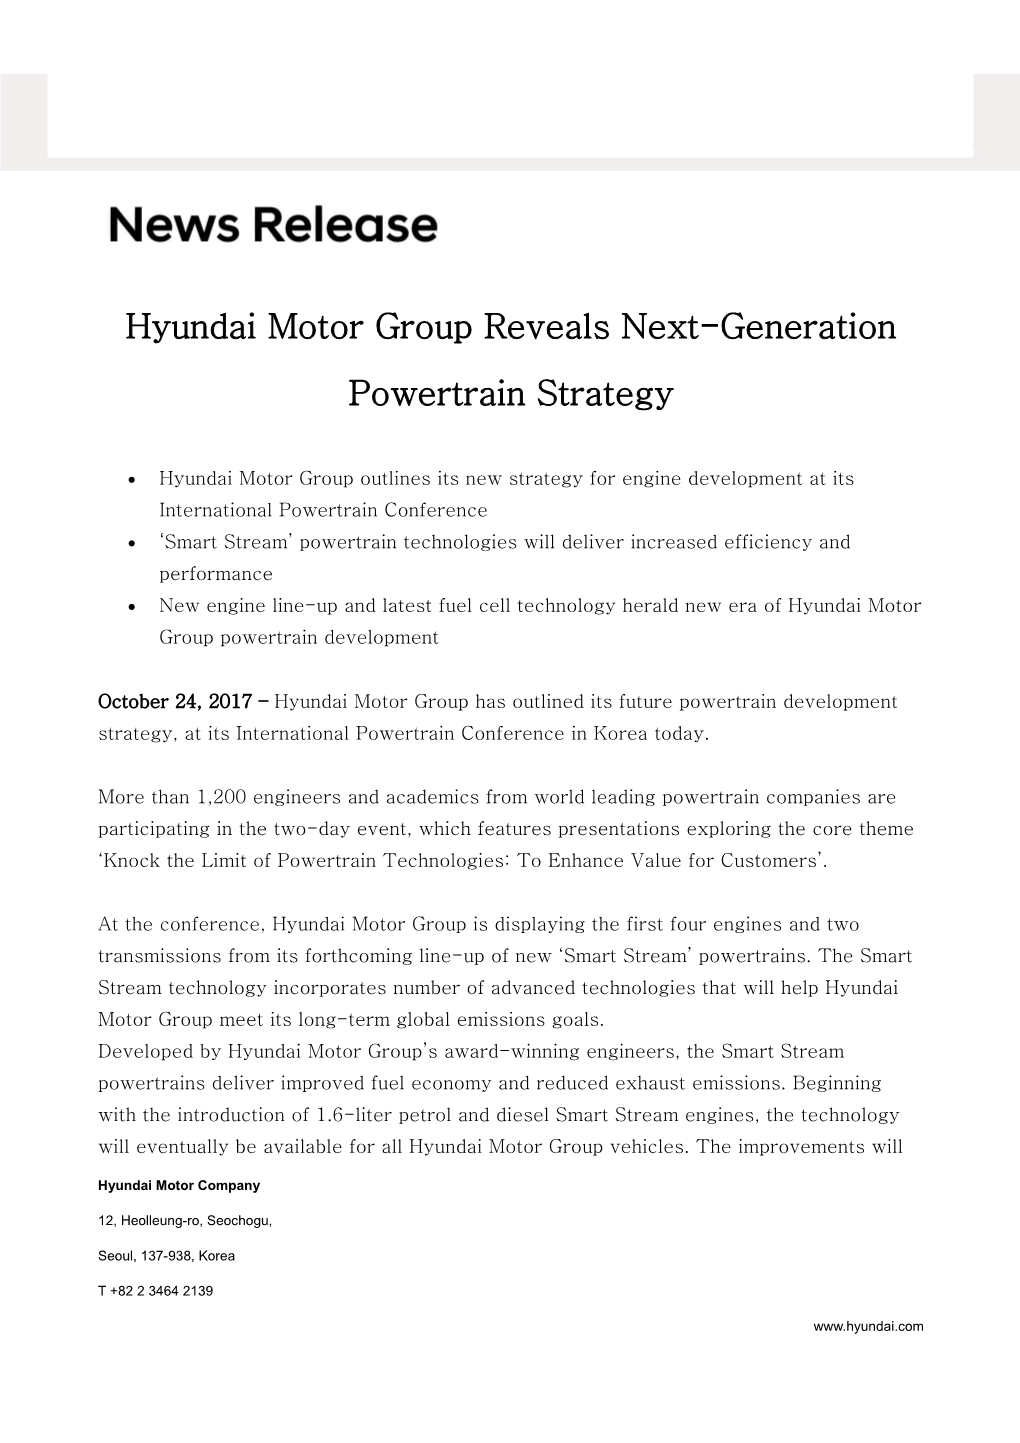 Hyundai Motor Group Reveals Next-Generation